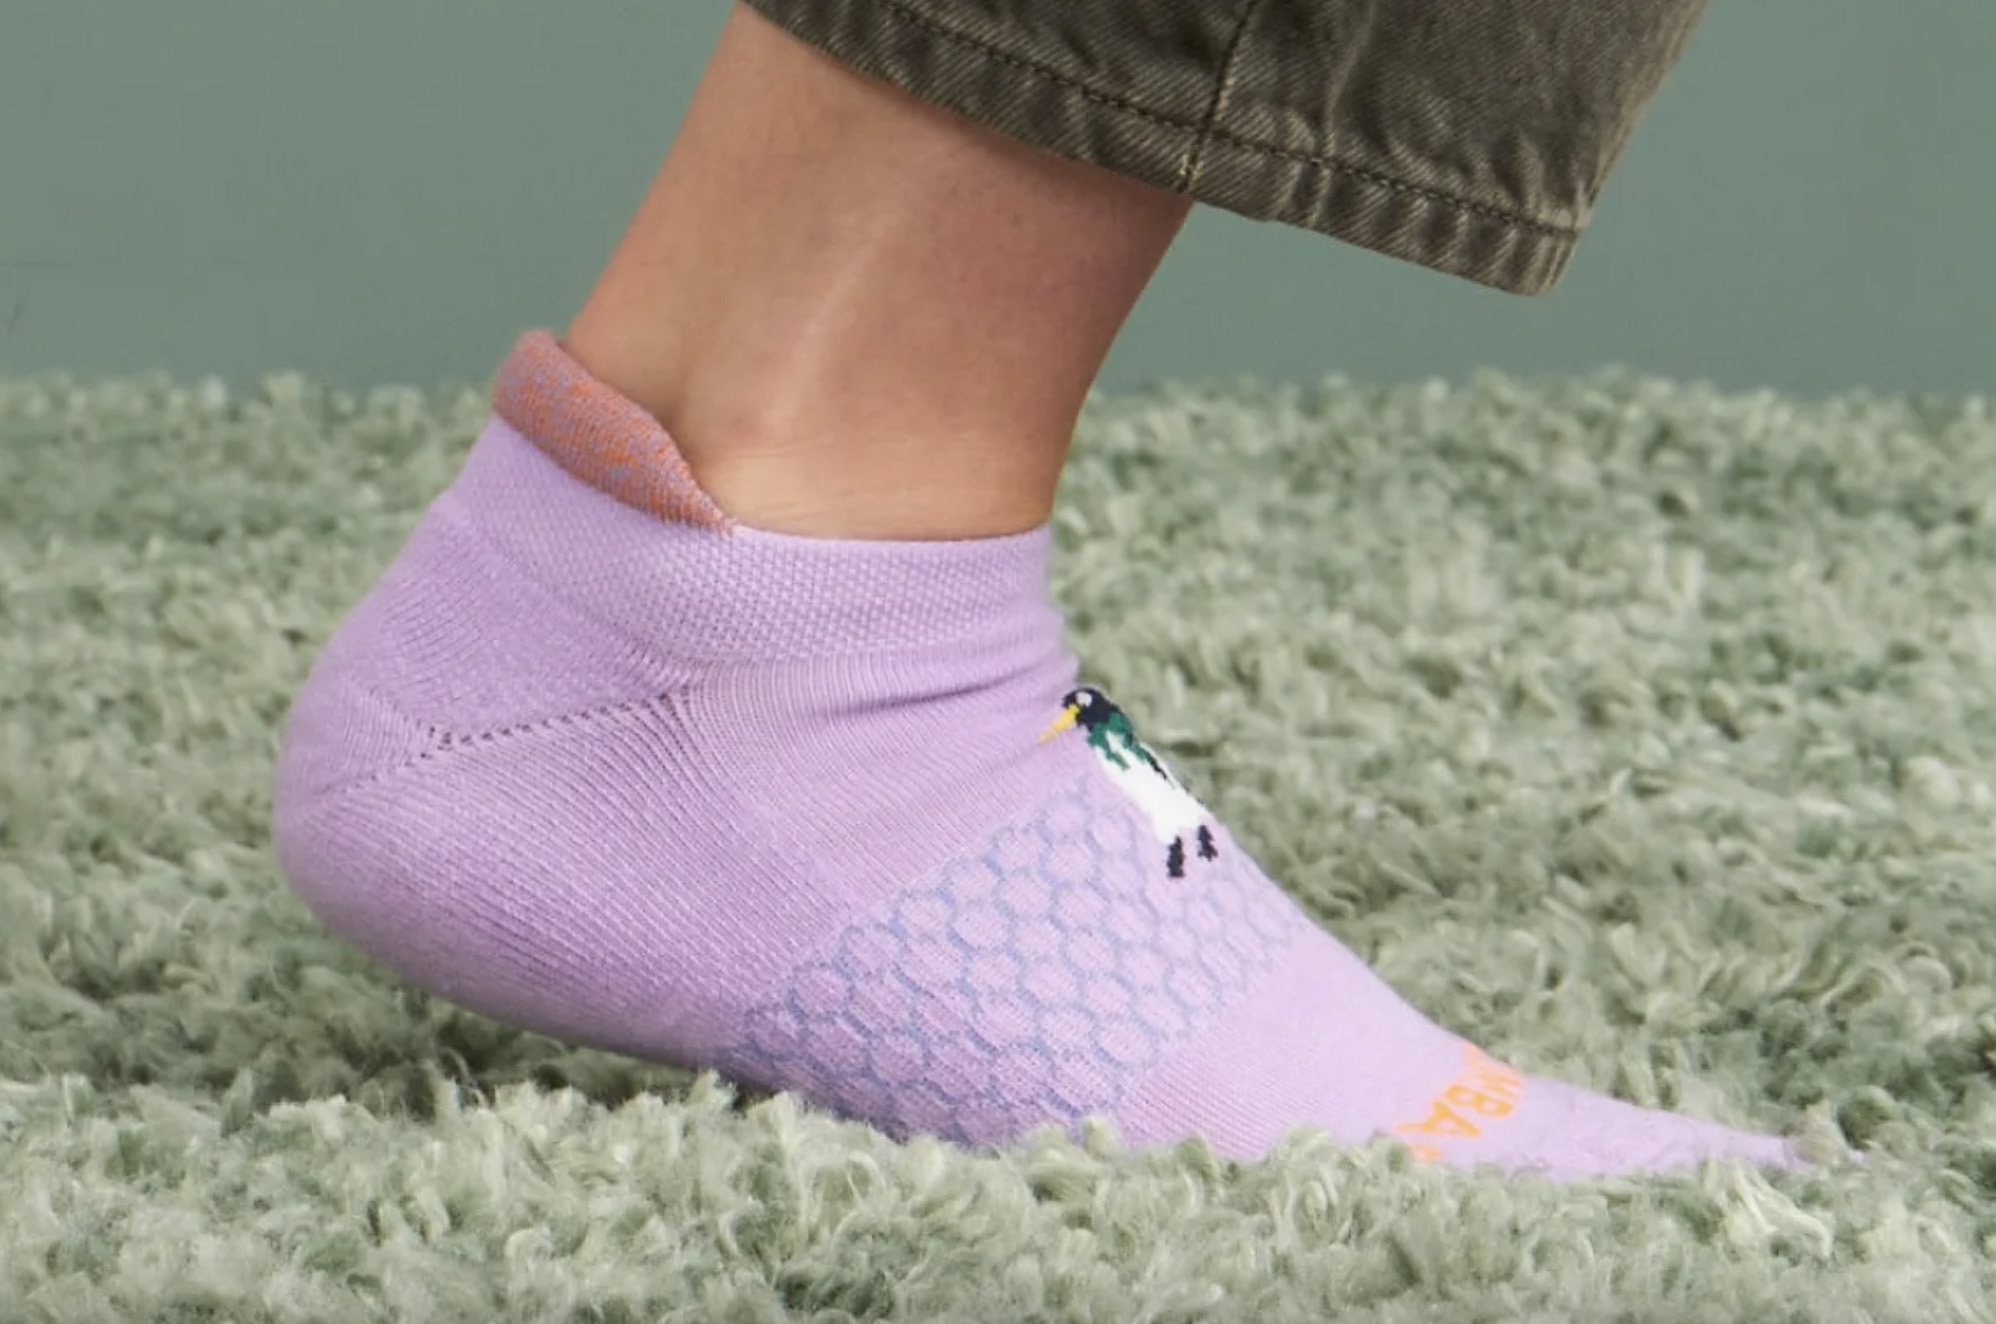 Toddler Gripper Calf Sock 12-Pack - Bombas